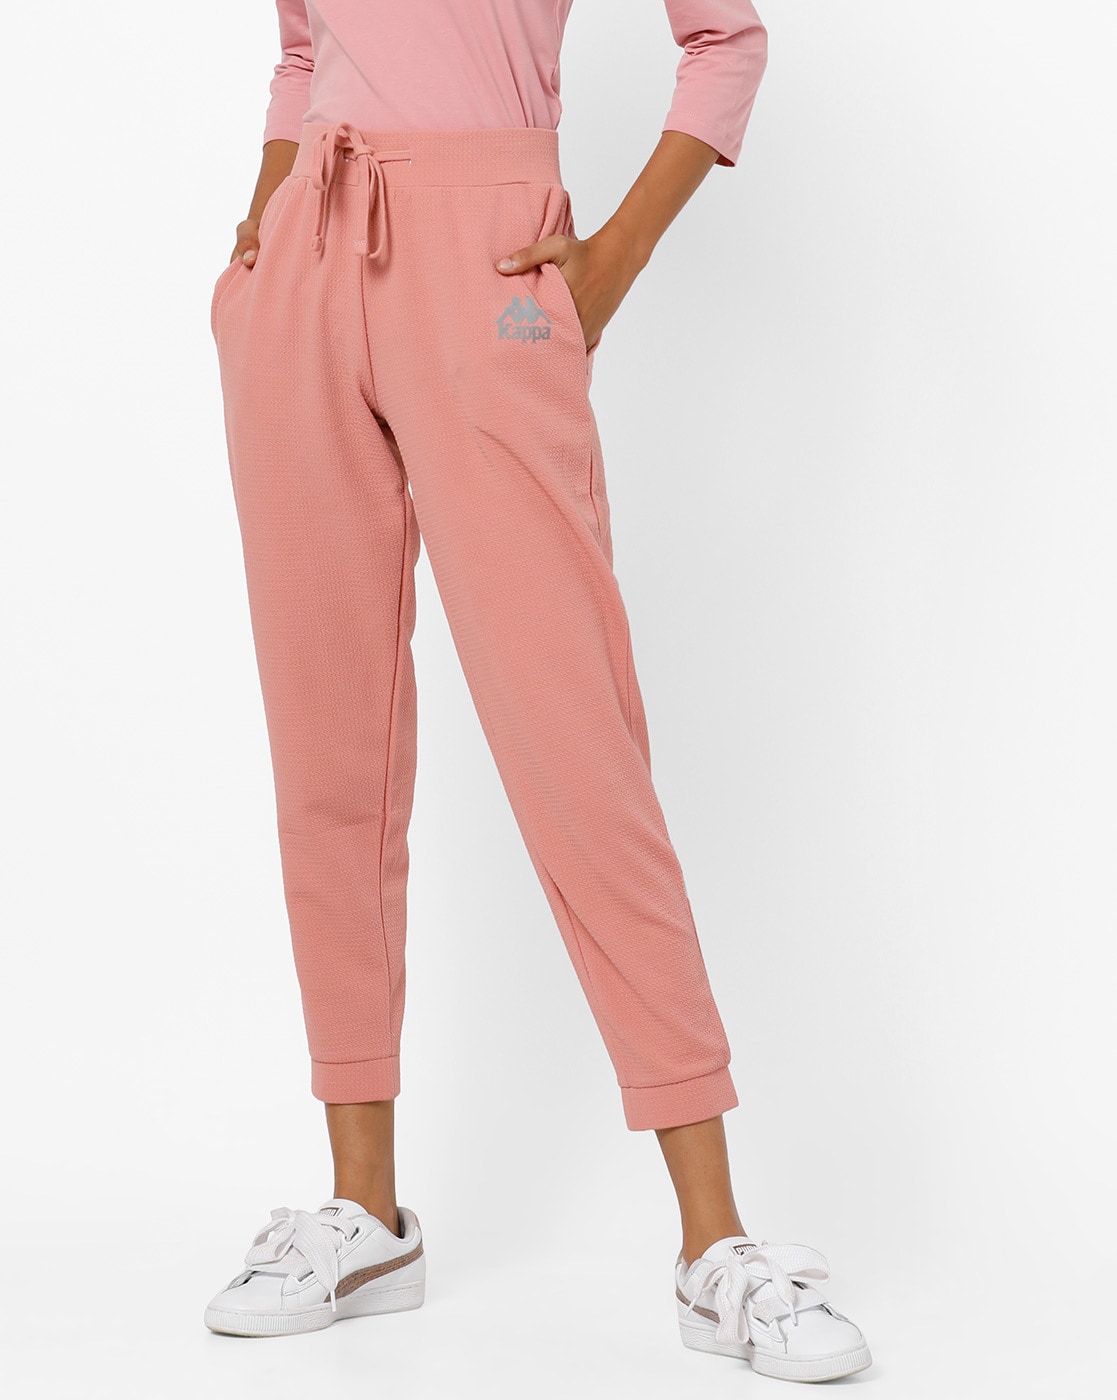 pink kappa pants